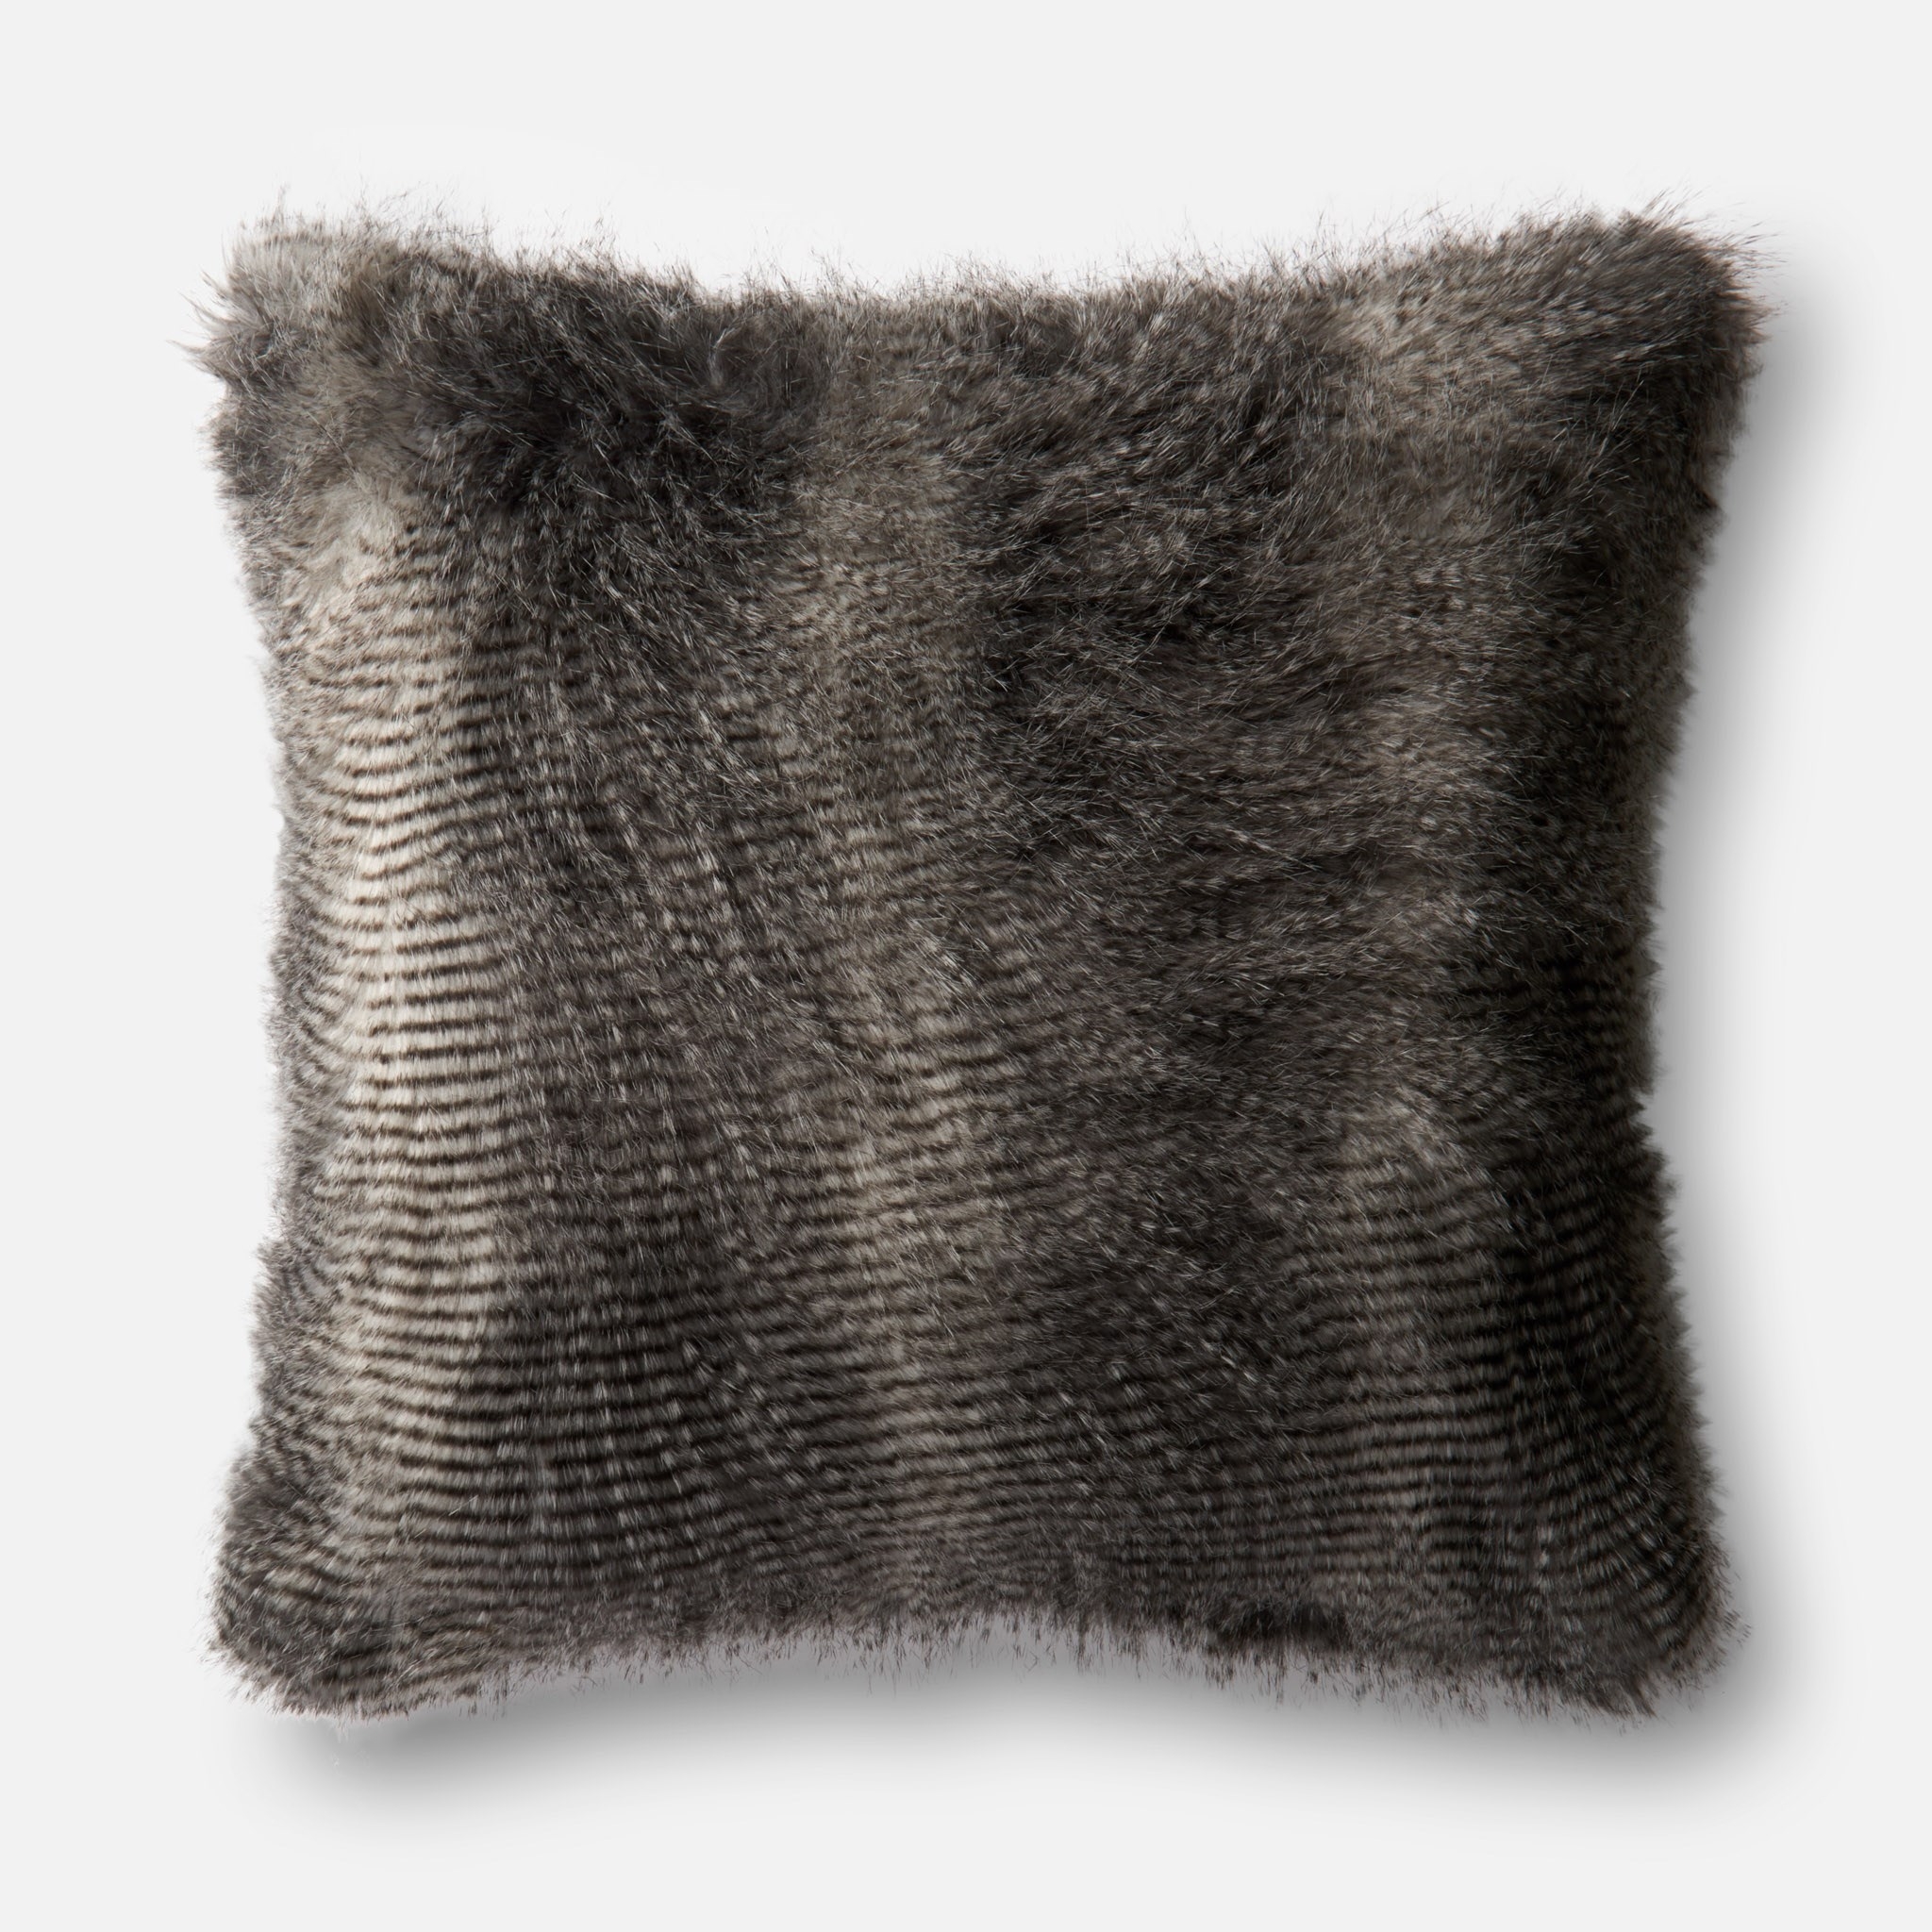 Faux Fur Throw Pillow, Black, 22" x 22" - Image 0